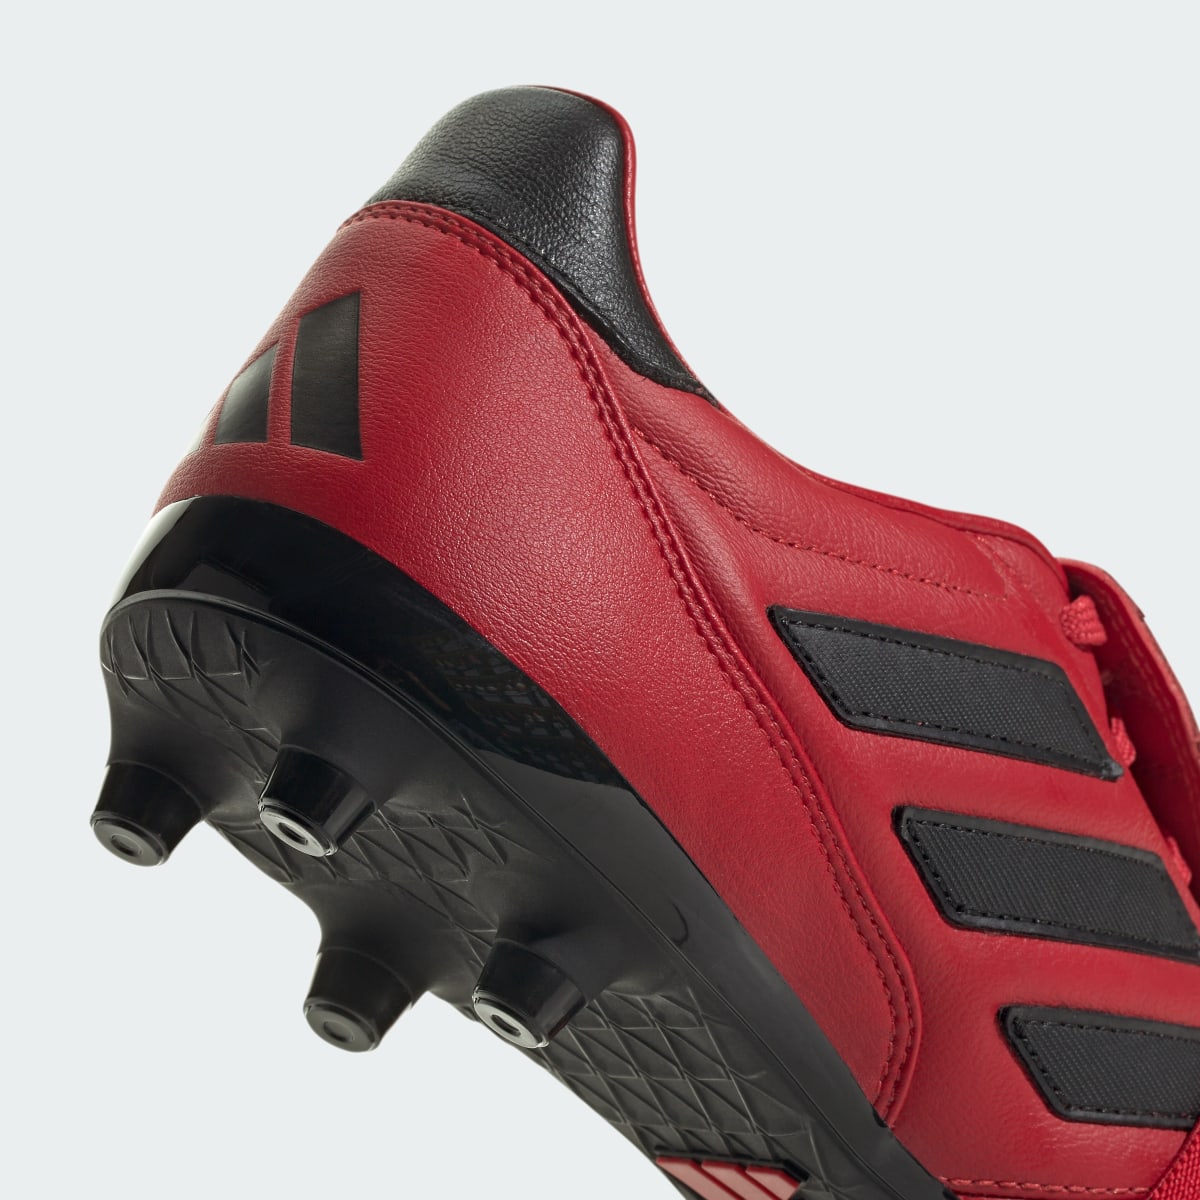 Adidas Copa Gloro Firm Ground Boots. 9